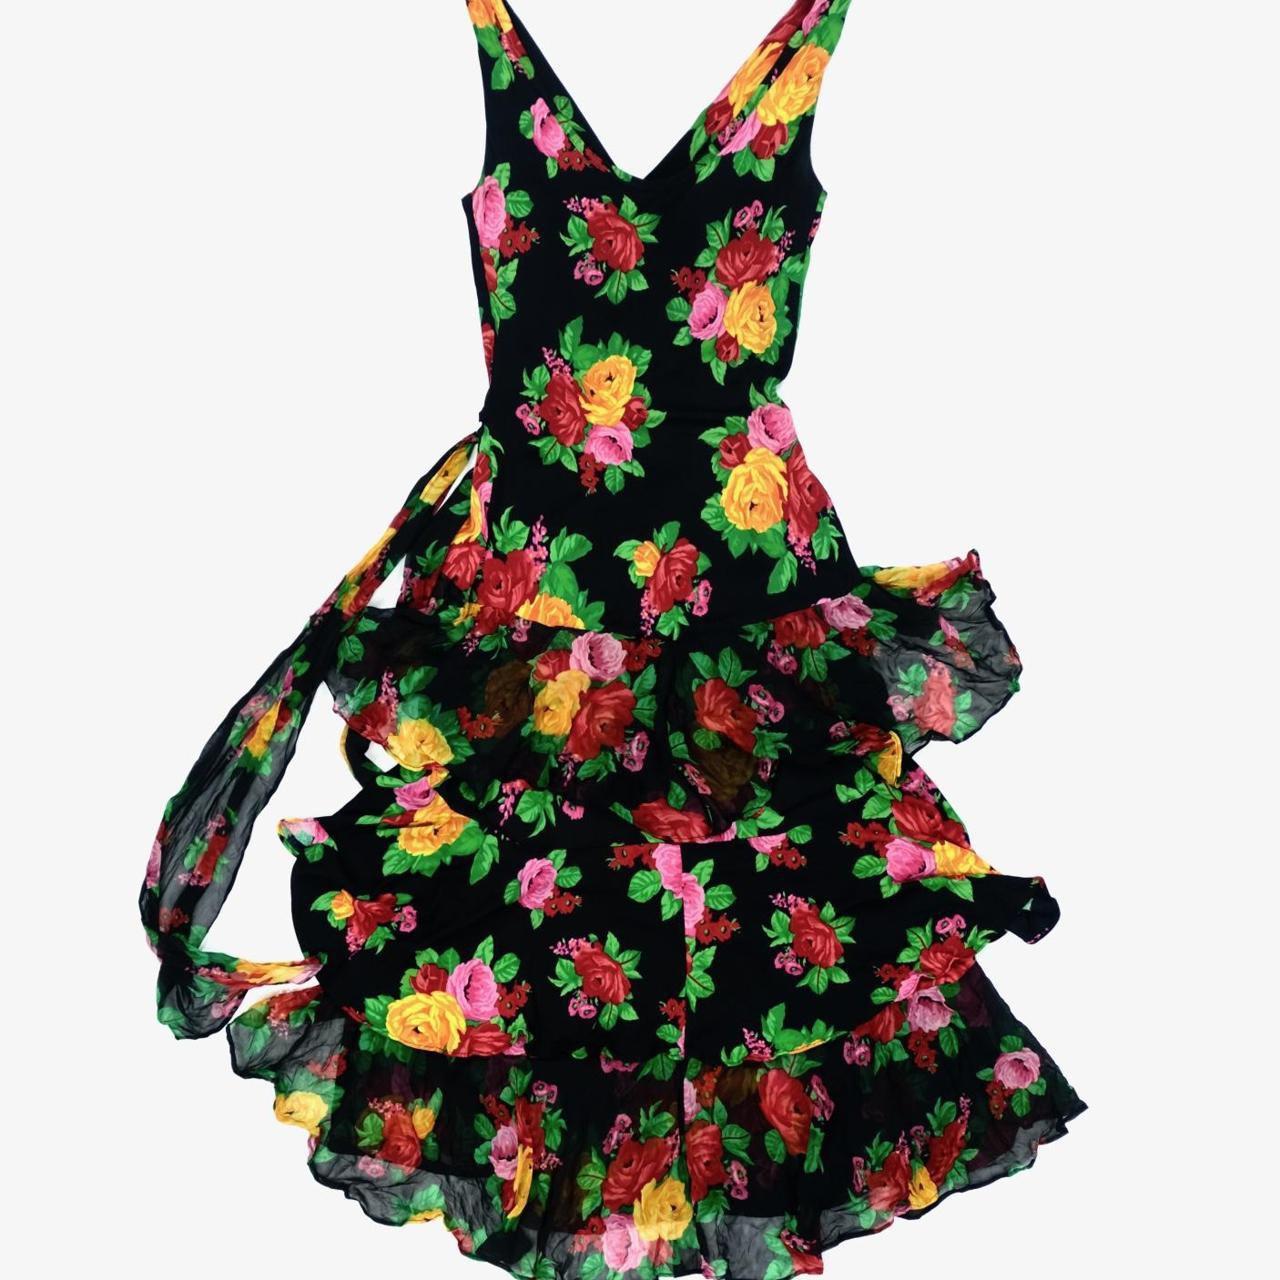 Moschino Couture Dress